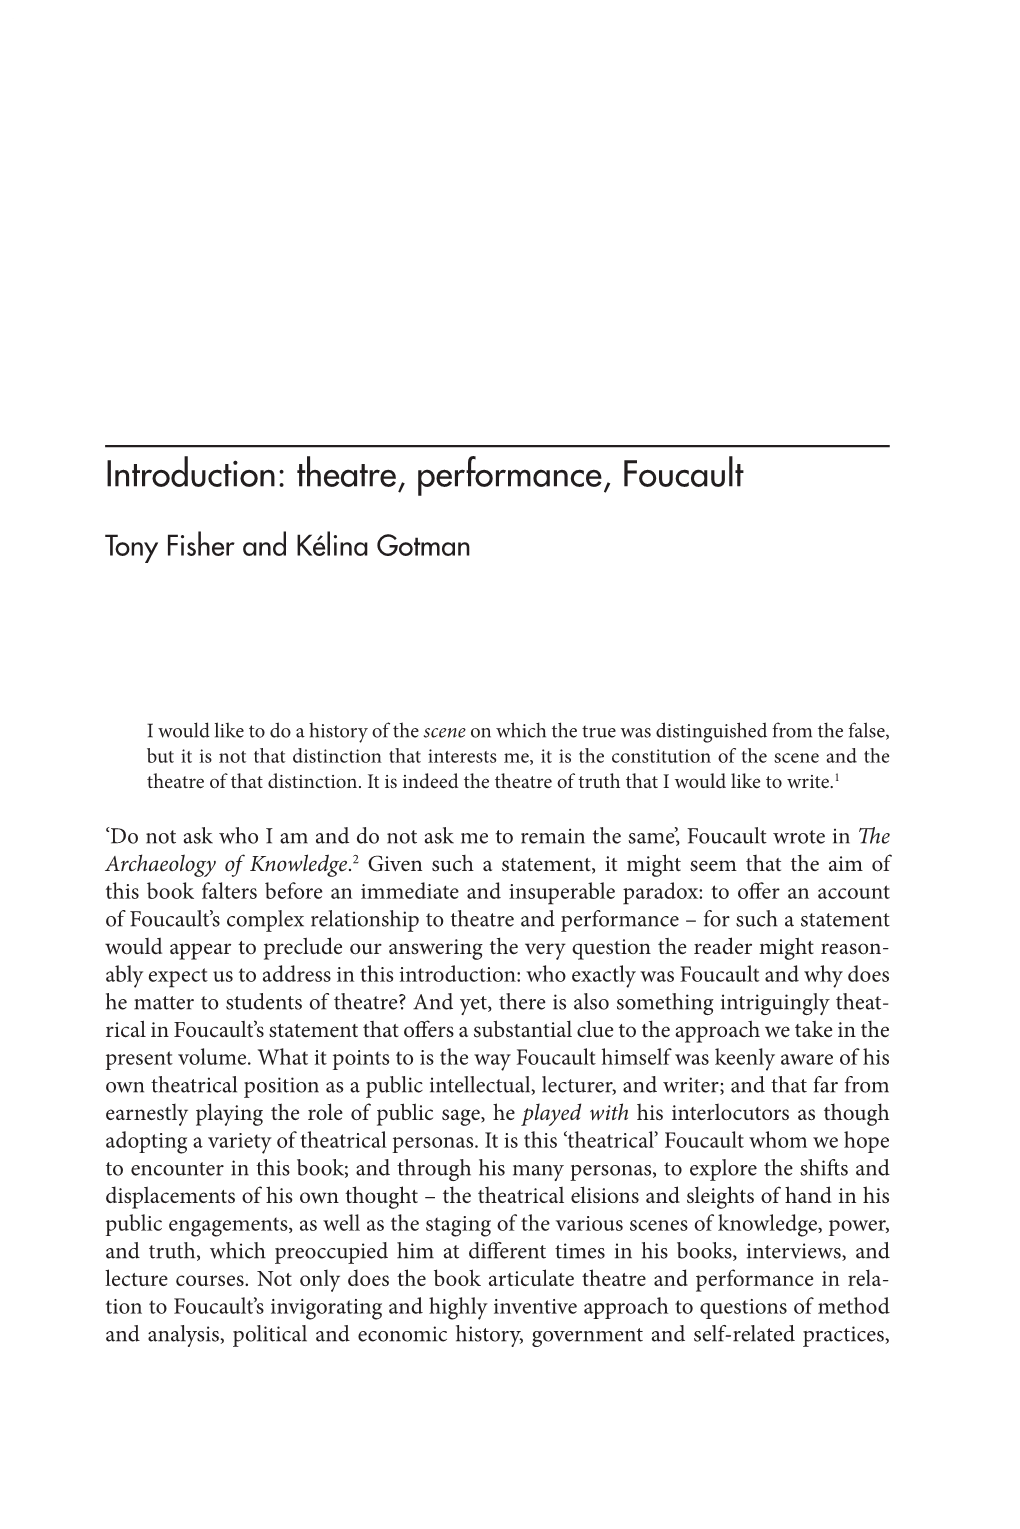 Theatre, Performance, Foucault